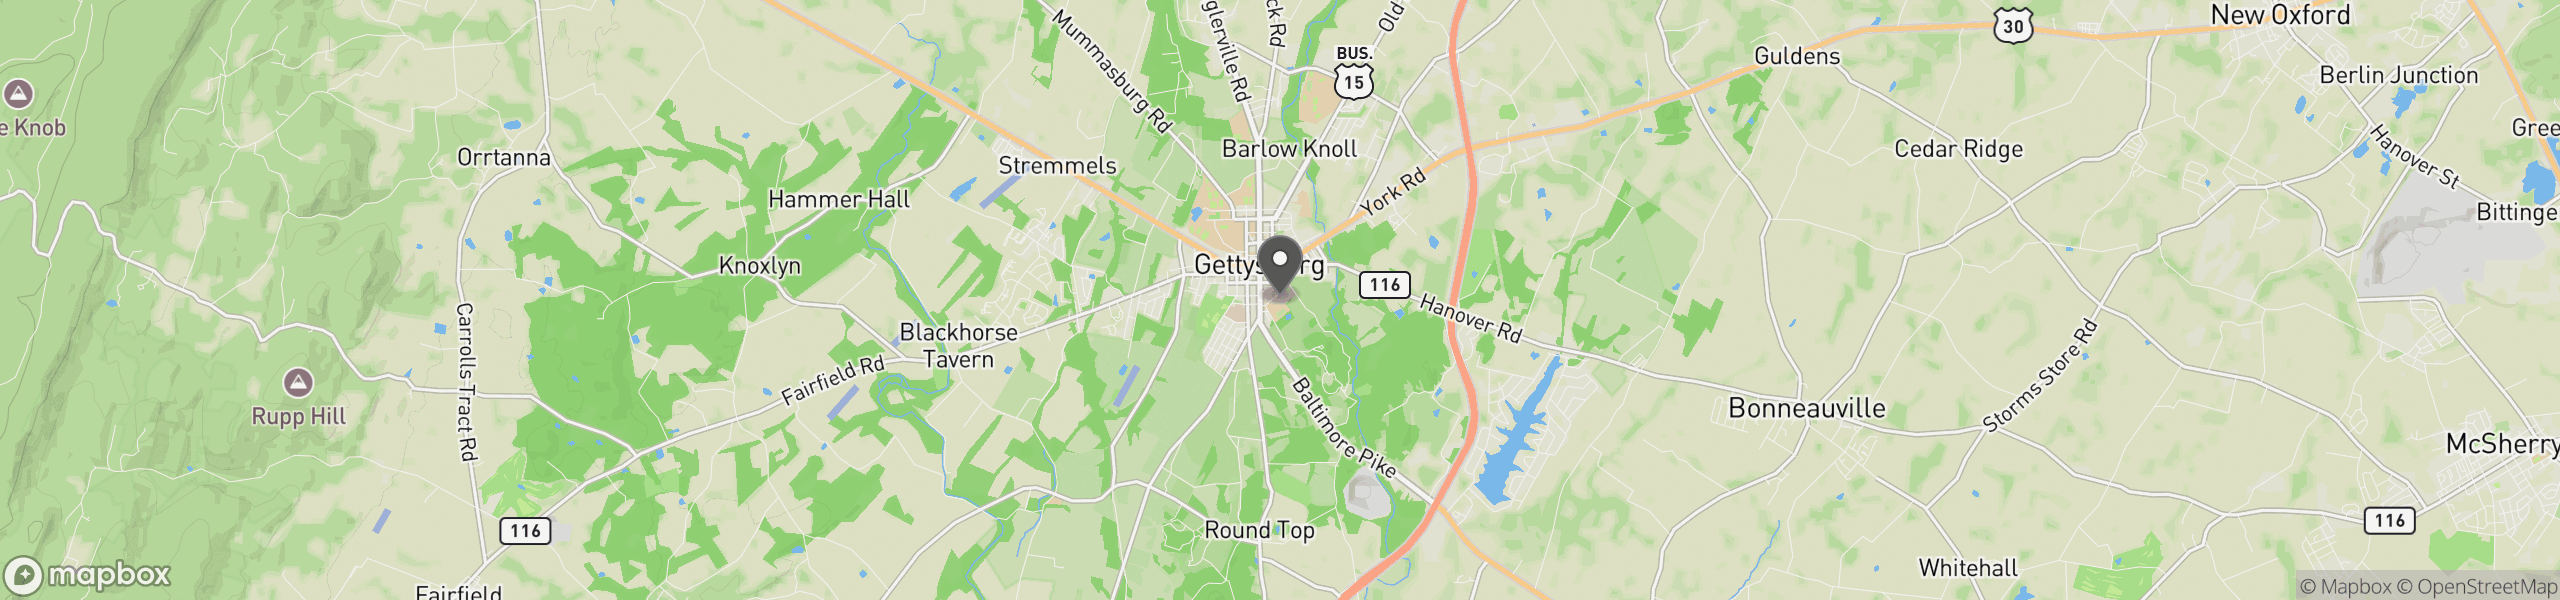 Gettysburg, PA